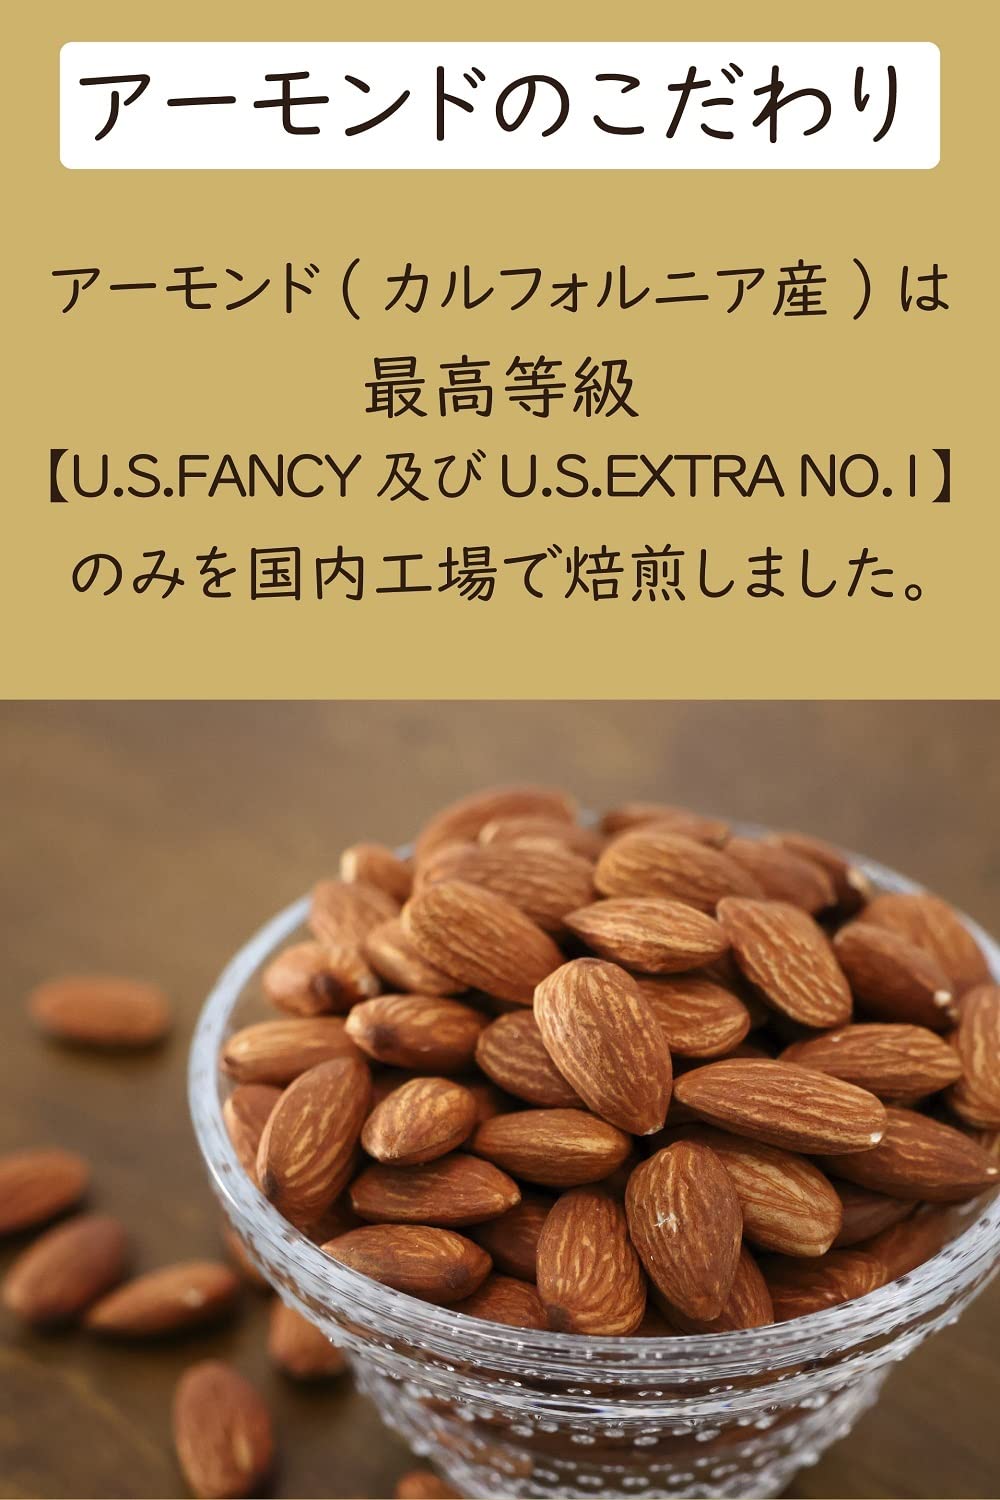 Cashew　Nuts,　Closure　Almonds,　Walnuts),　chính　(Ungrilled　lbs　2.2　Aluminum　Amazon　Raw　Salt-free,　Nhật　Selected　2023　trên　Zipper　Ungrilled　Mixed　Fado　kg)　Bag　Nuts　(1　Mua　hãng　Carefully　Additive-Free,